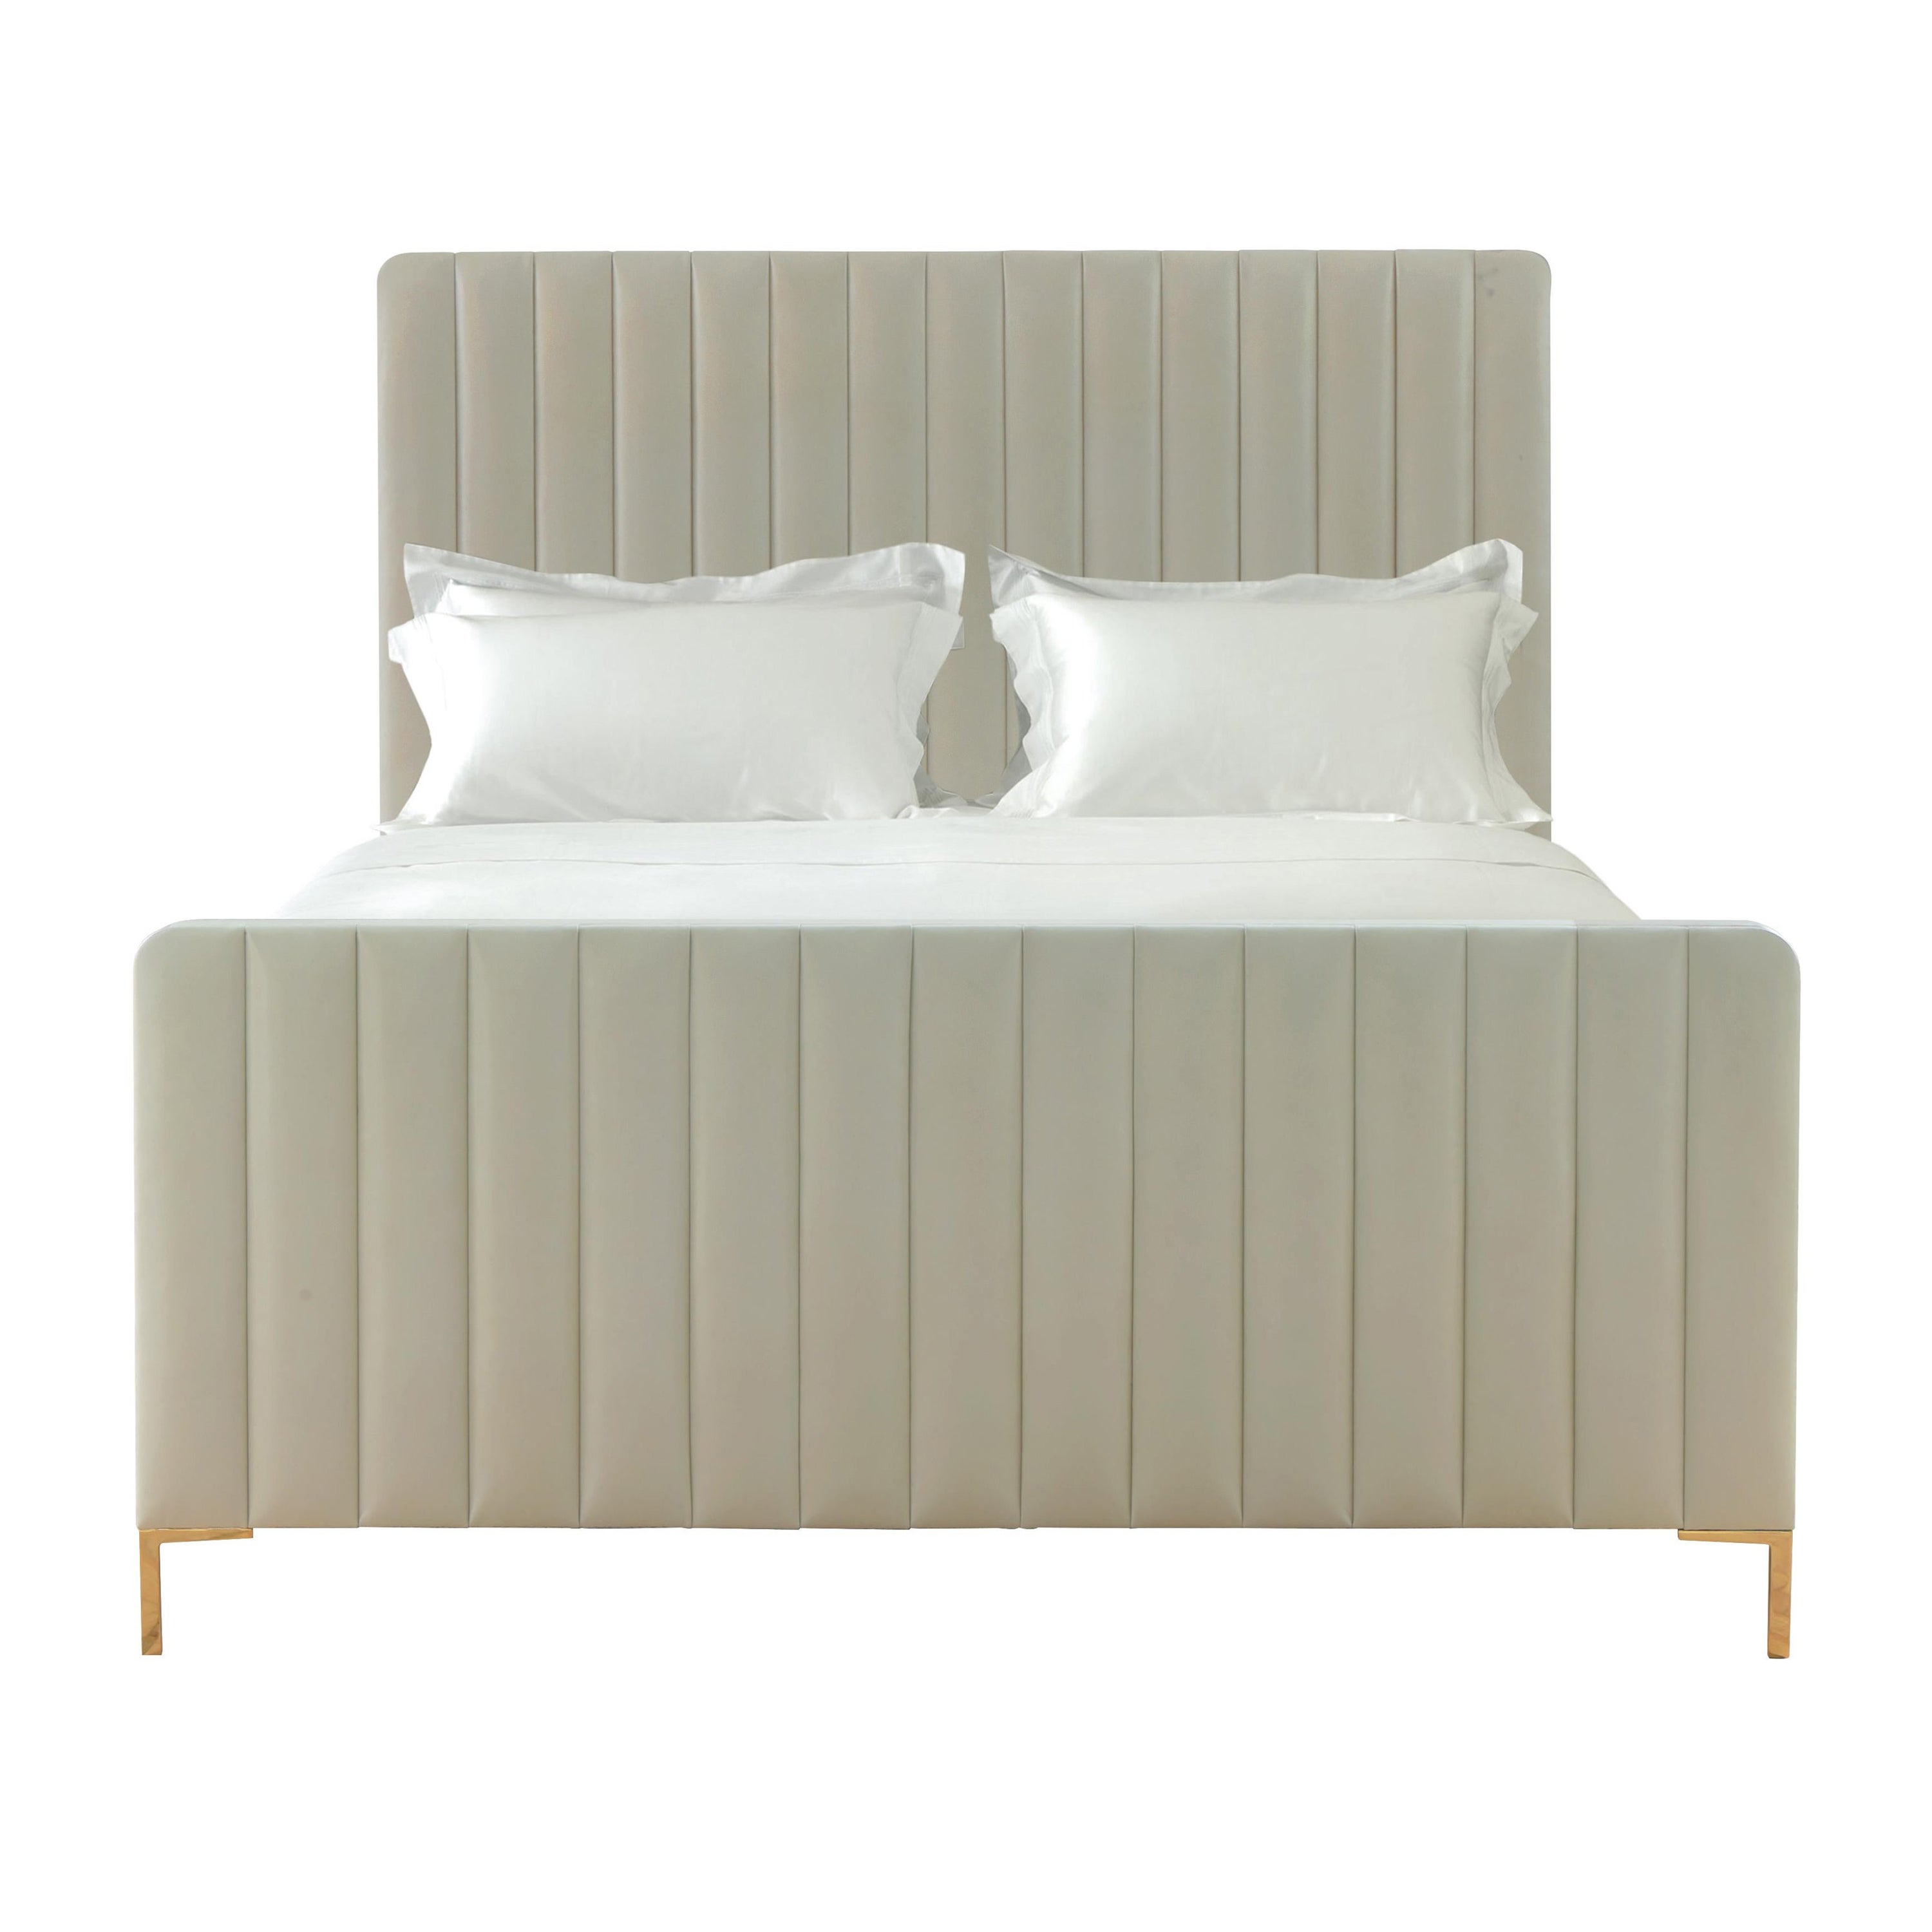 Bespoke Savoir Chrissy & Nº1 Bed Set, Handmade in London, Eastern King Size For Sale